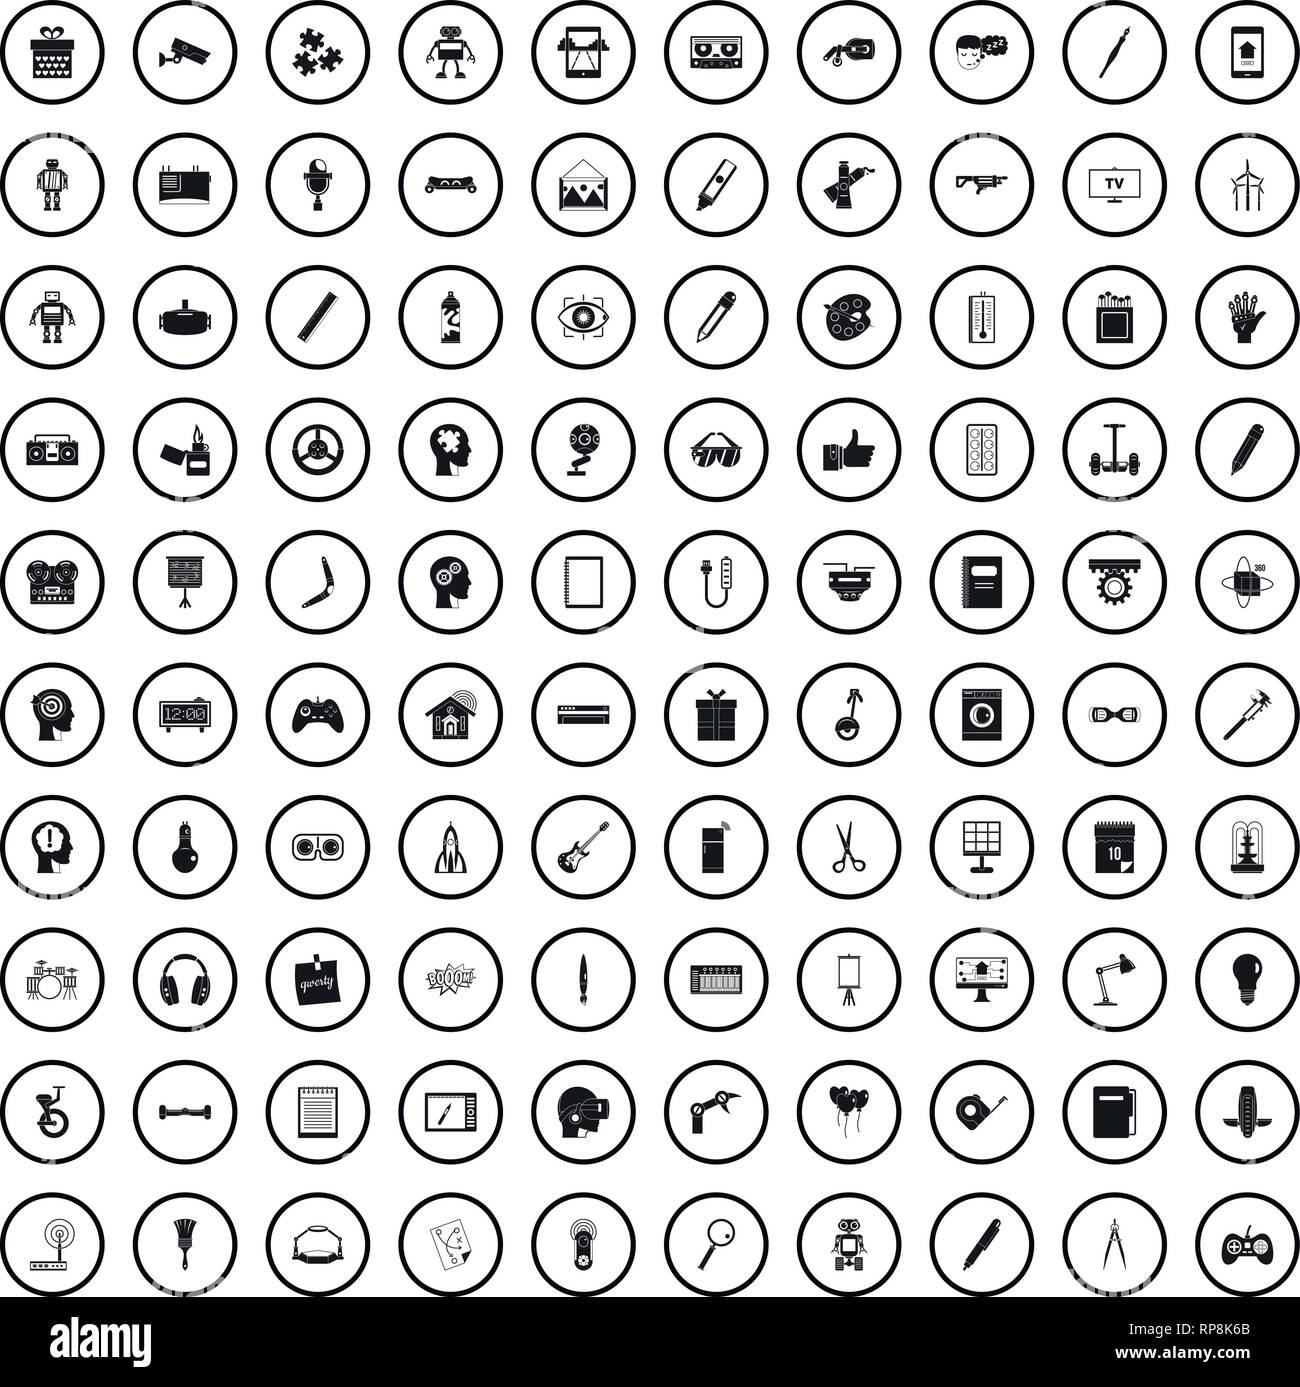 100 kreative Idee Icons Set, einfachen Stil Stock Vektor